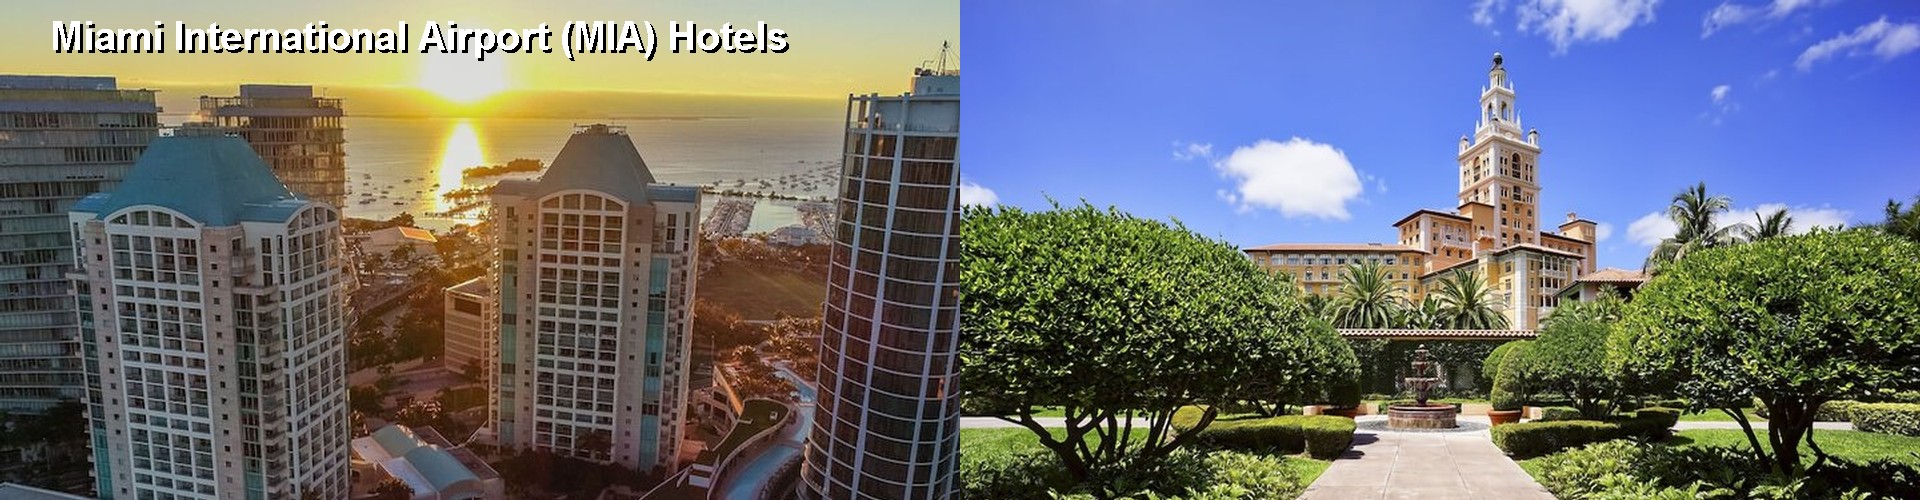 5 Best Hotels near Miami International Airport (MIA)